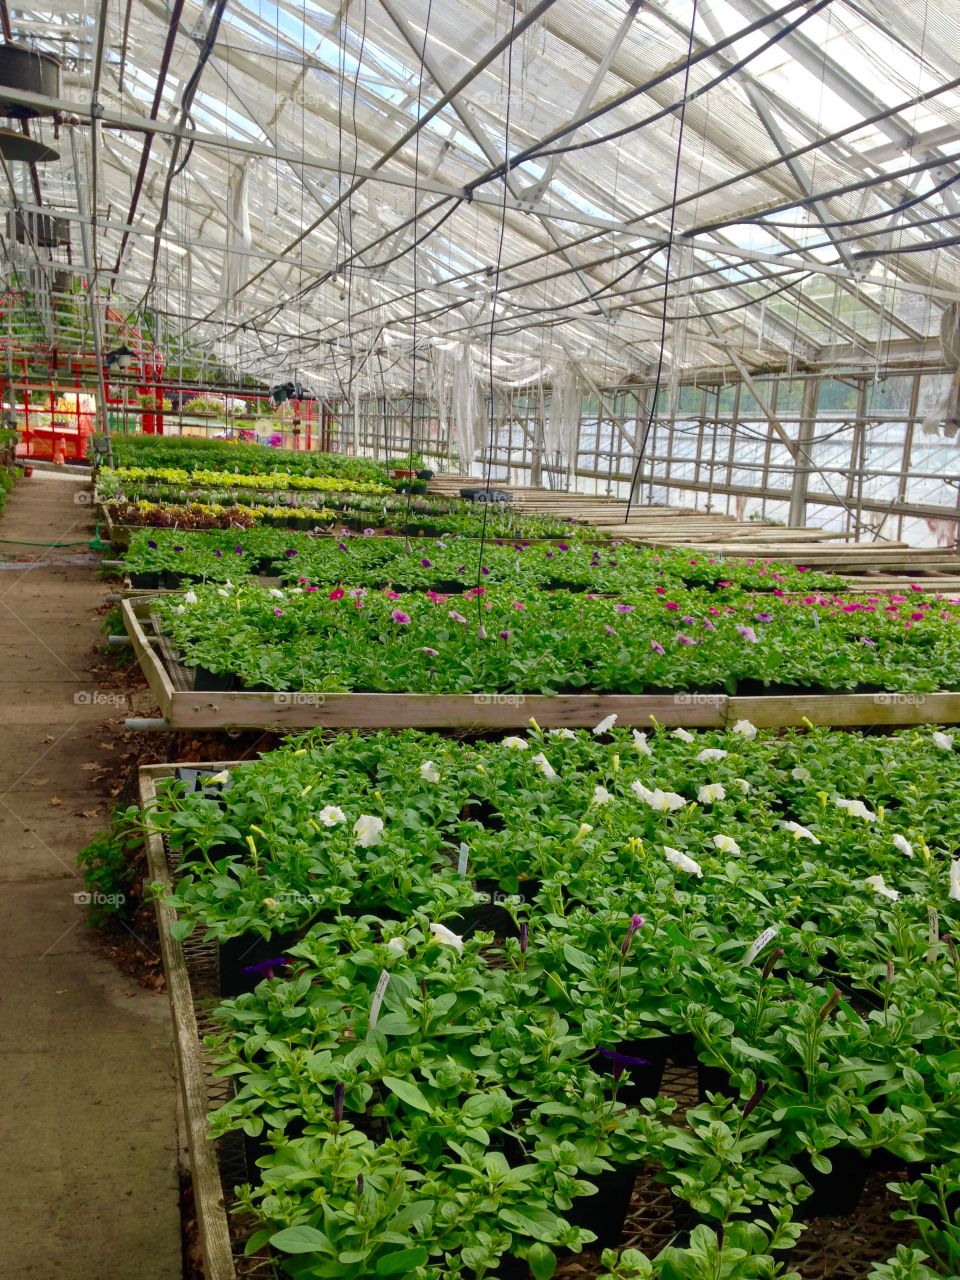 Greenhouse, Conservatory, Agriculture, Garden, Leaf